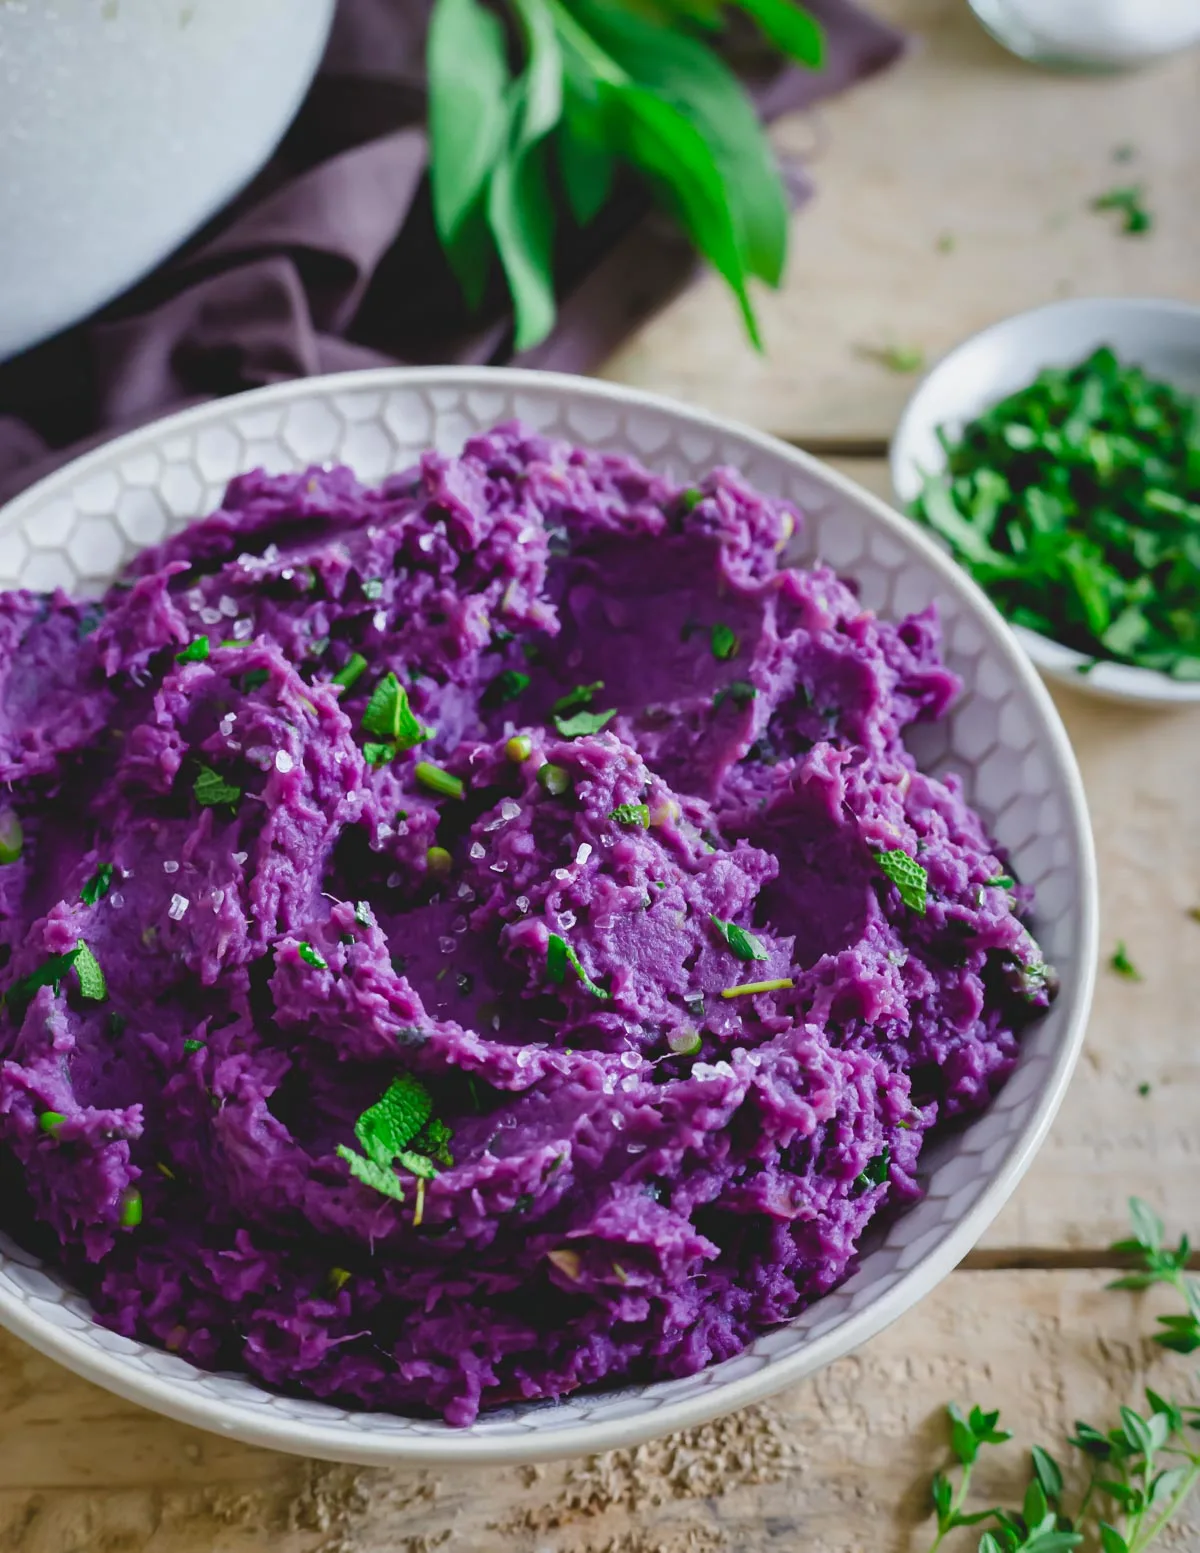 A small white bowl with vibrant purple mash. 